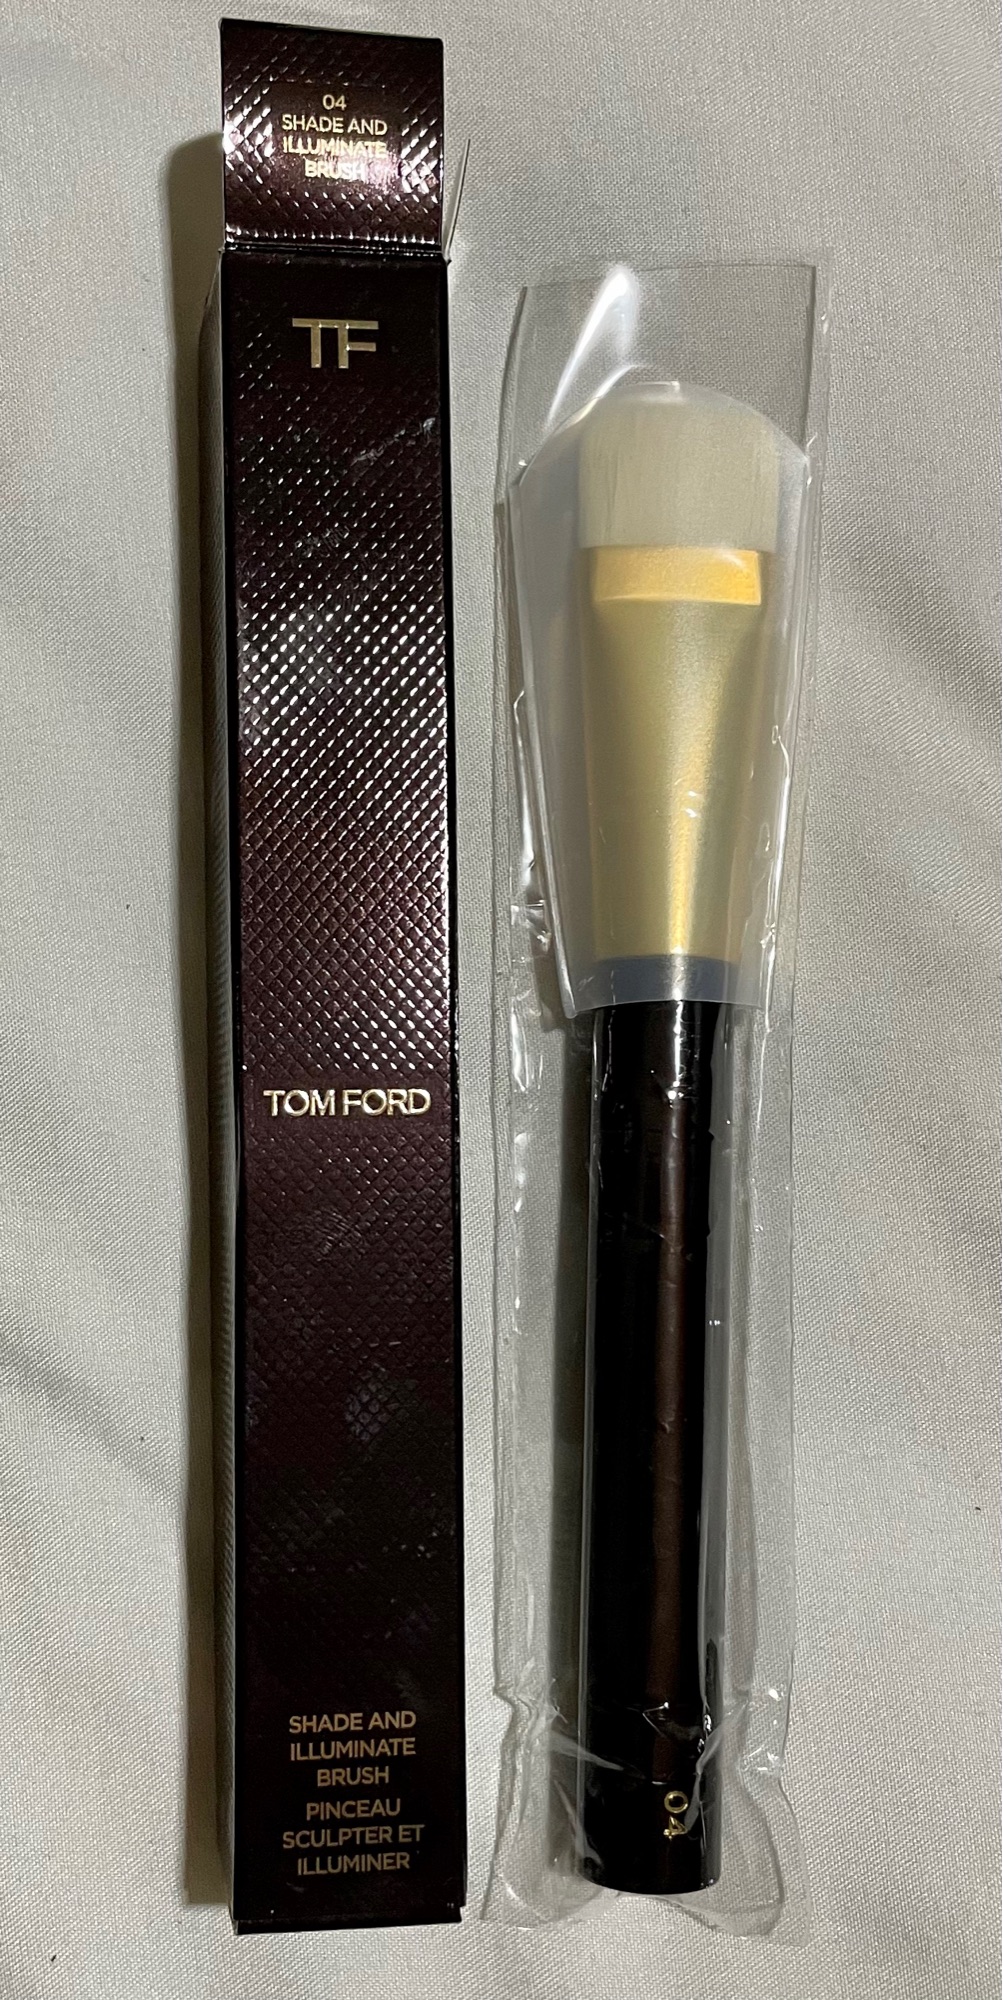 TOM FORD. Shade & Illuminate Brush 04. Made in Japan. | Lazada PH